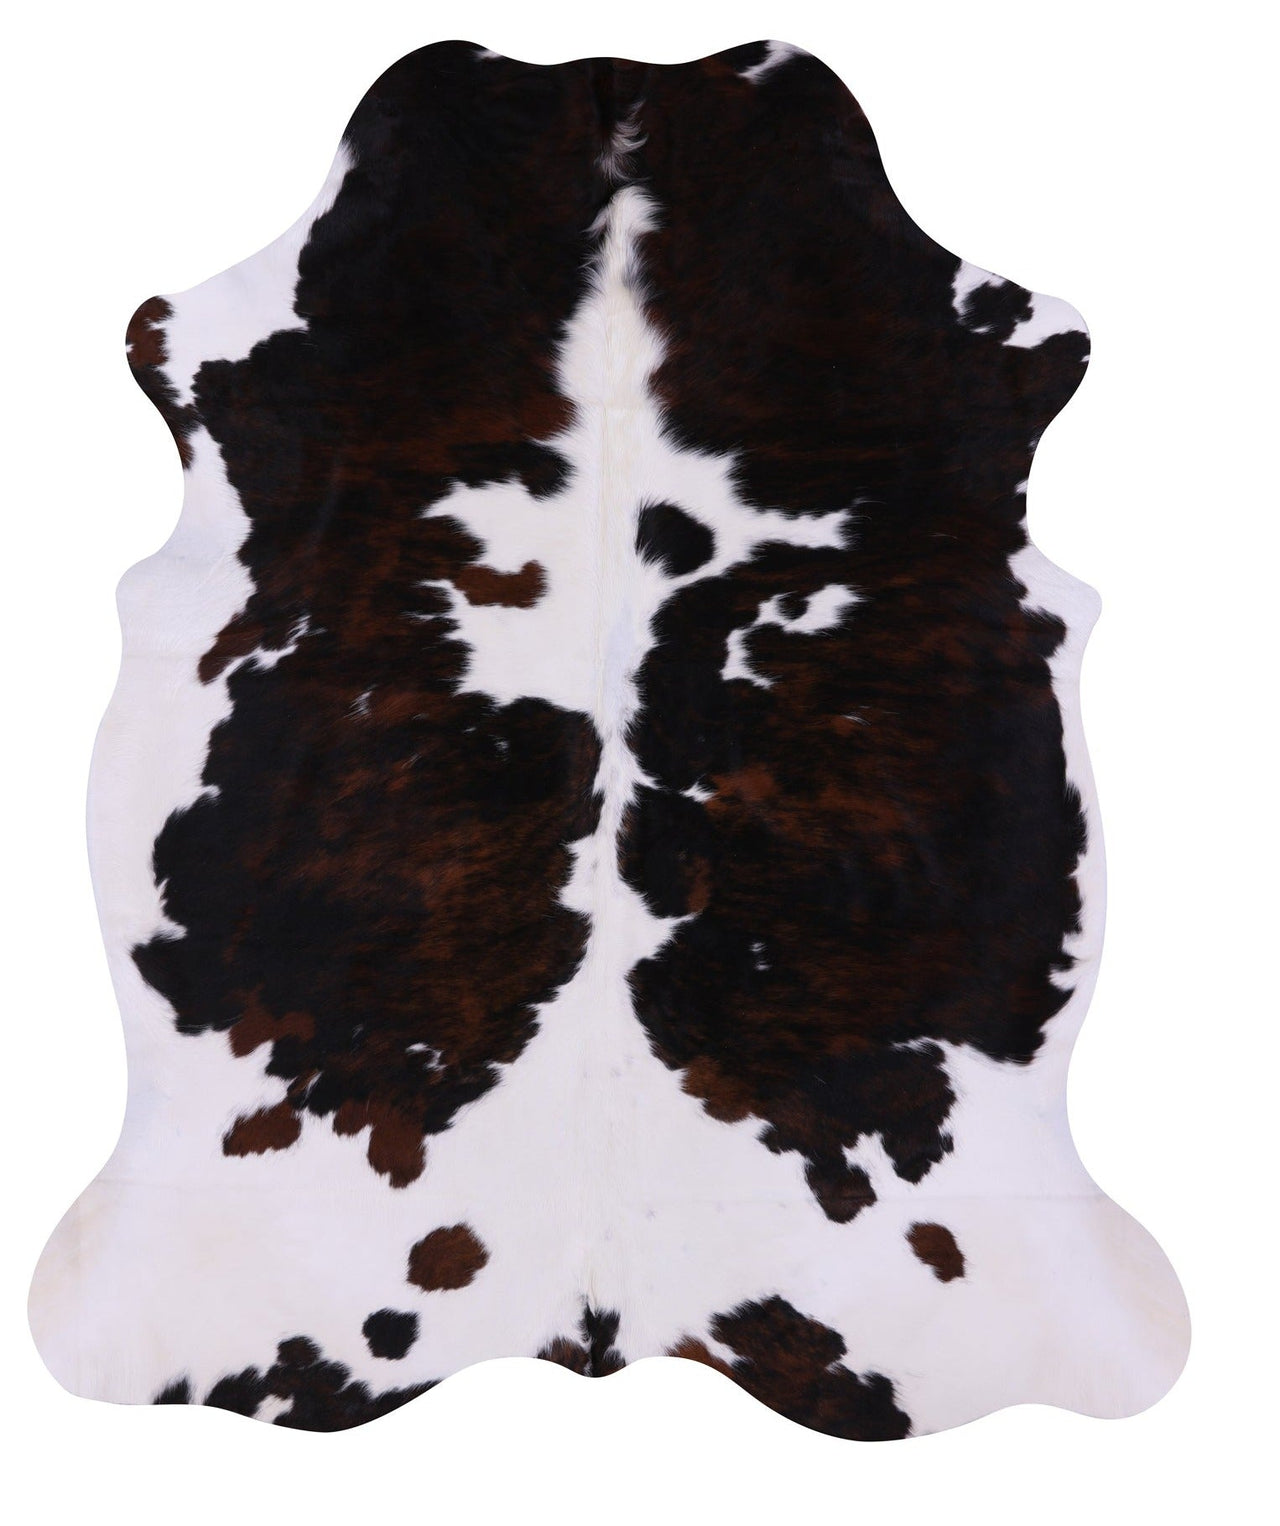 Black & White Natural Cowhide Rug - XLarge 7'5"H x 6'1"W